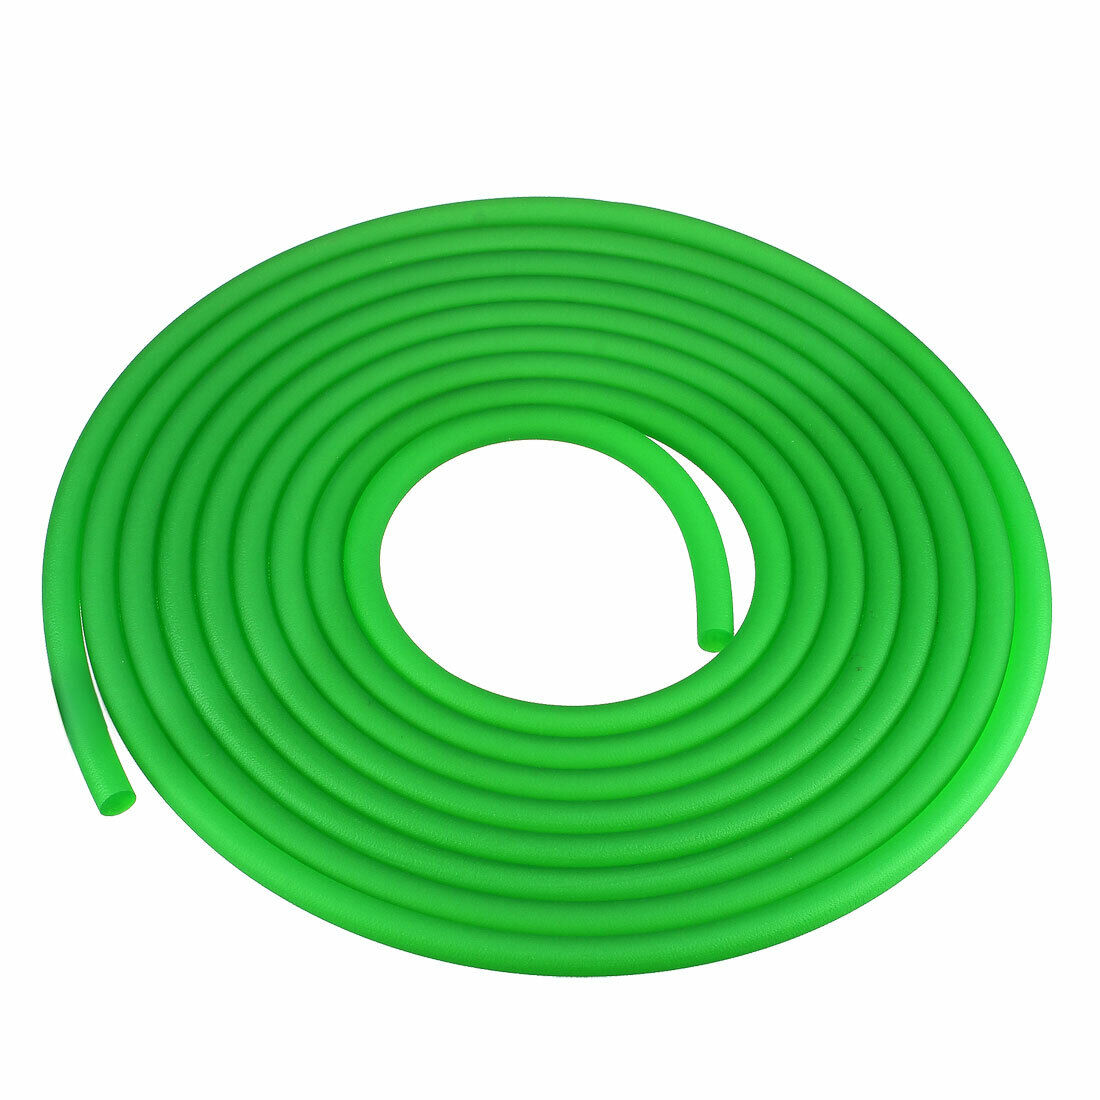 16ft 6mm PU Transmission Round Belt High-Performance Urethane Belting Green